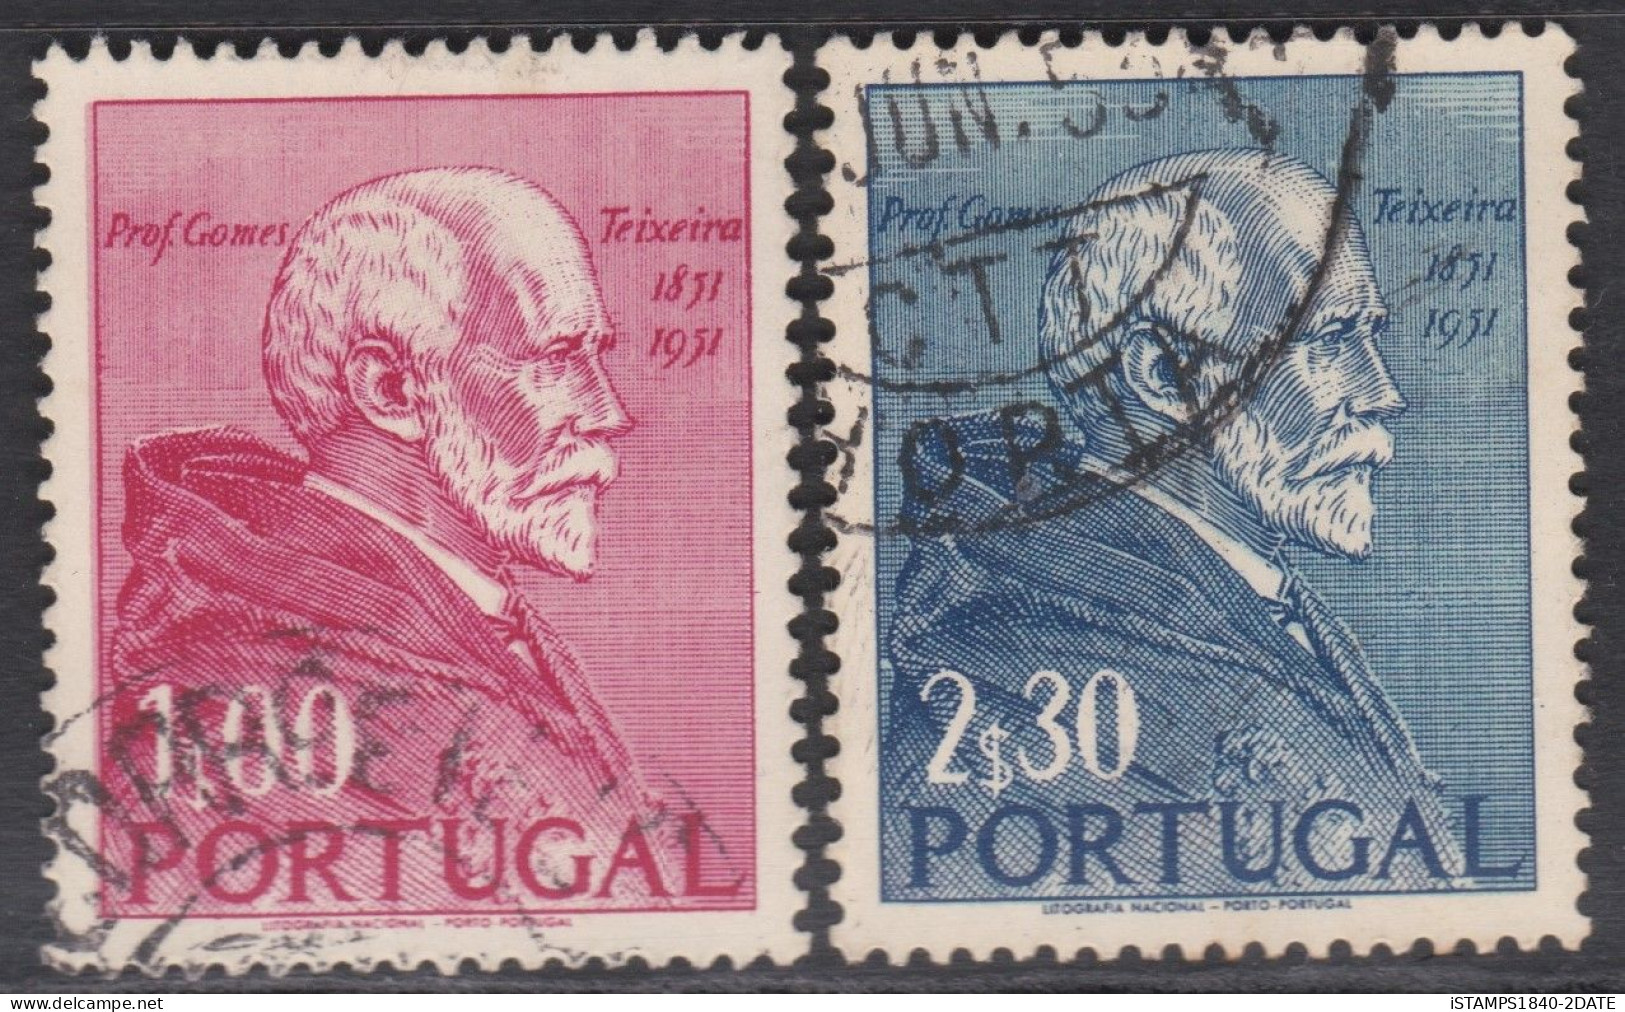 00486/ Portugal 1952 Sg1069/70 Fine Used Set Of 2 Birth Centenary Of Professor Gomes Cv £7 - Ongebruikt